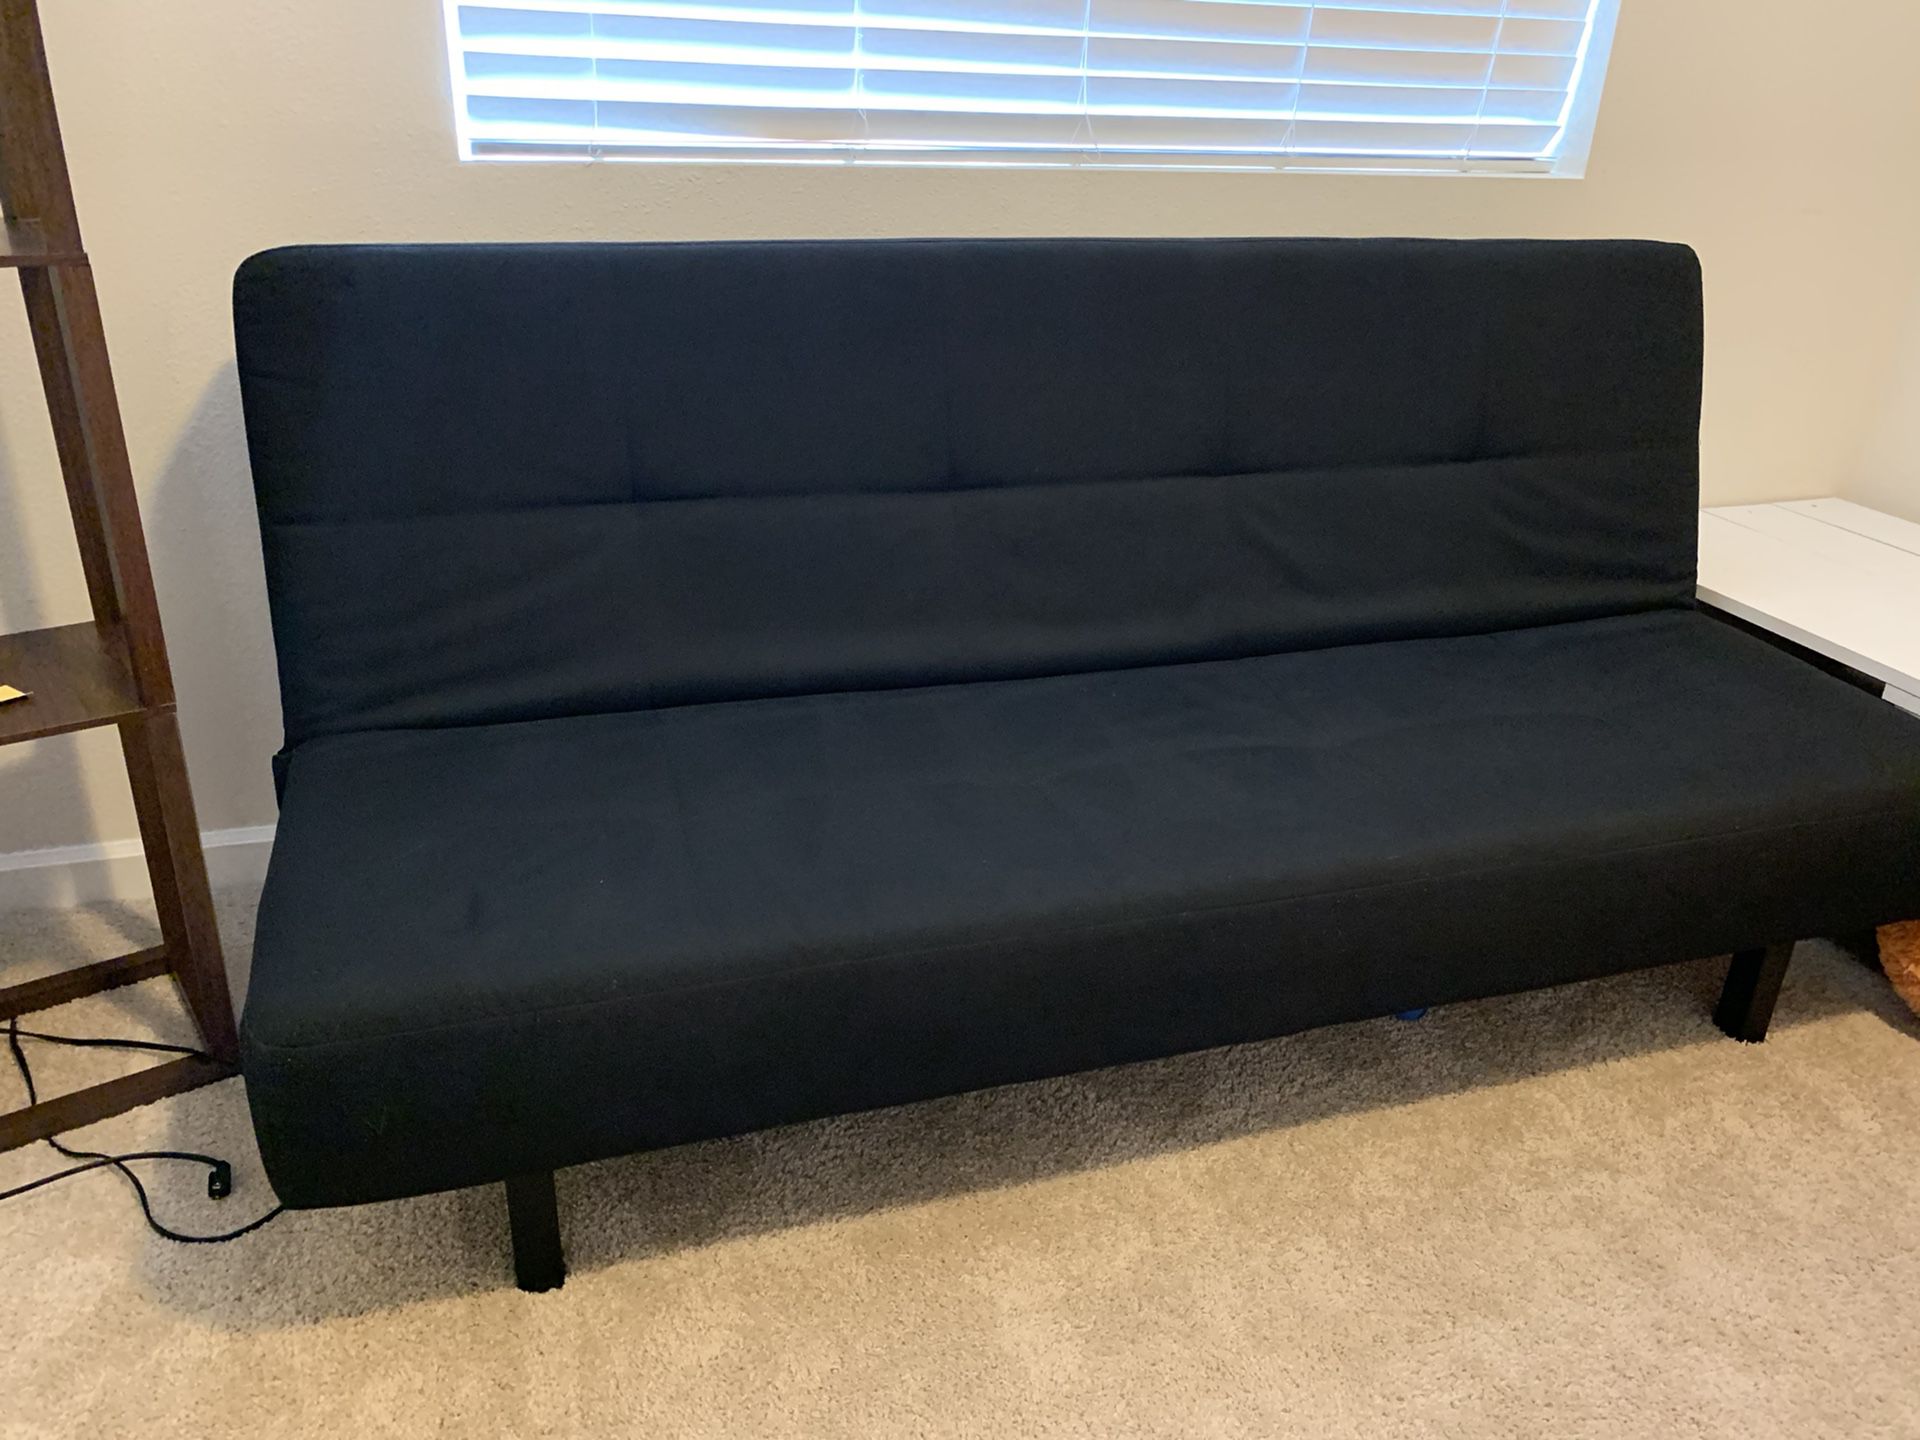 Black IKEA futon/couch